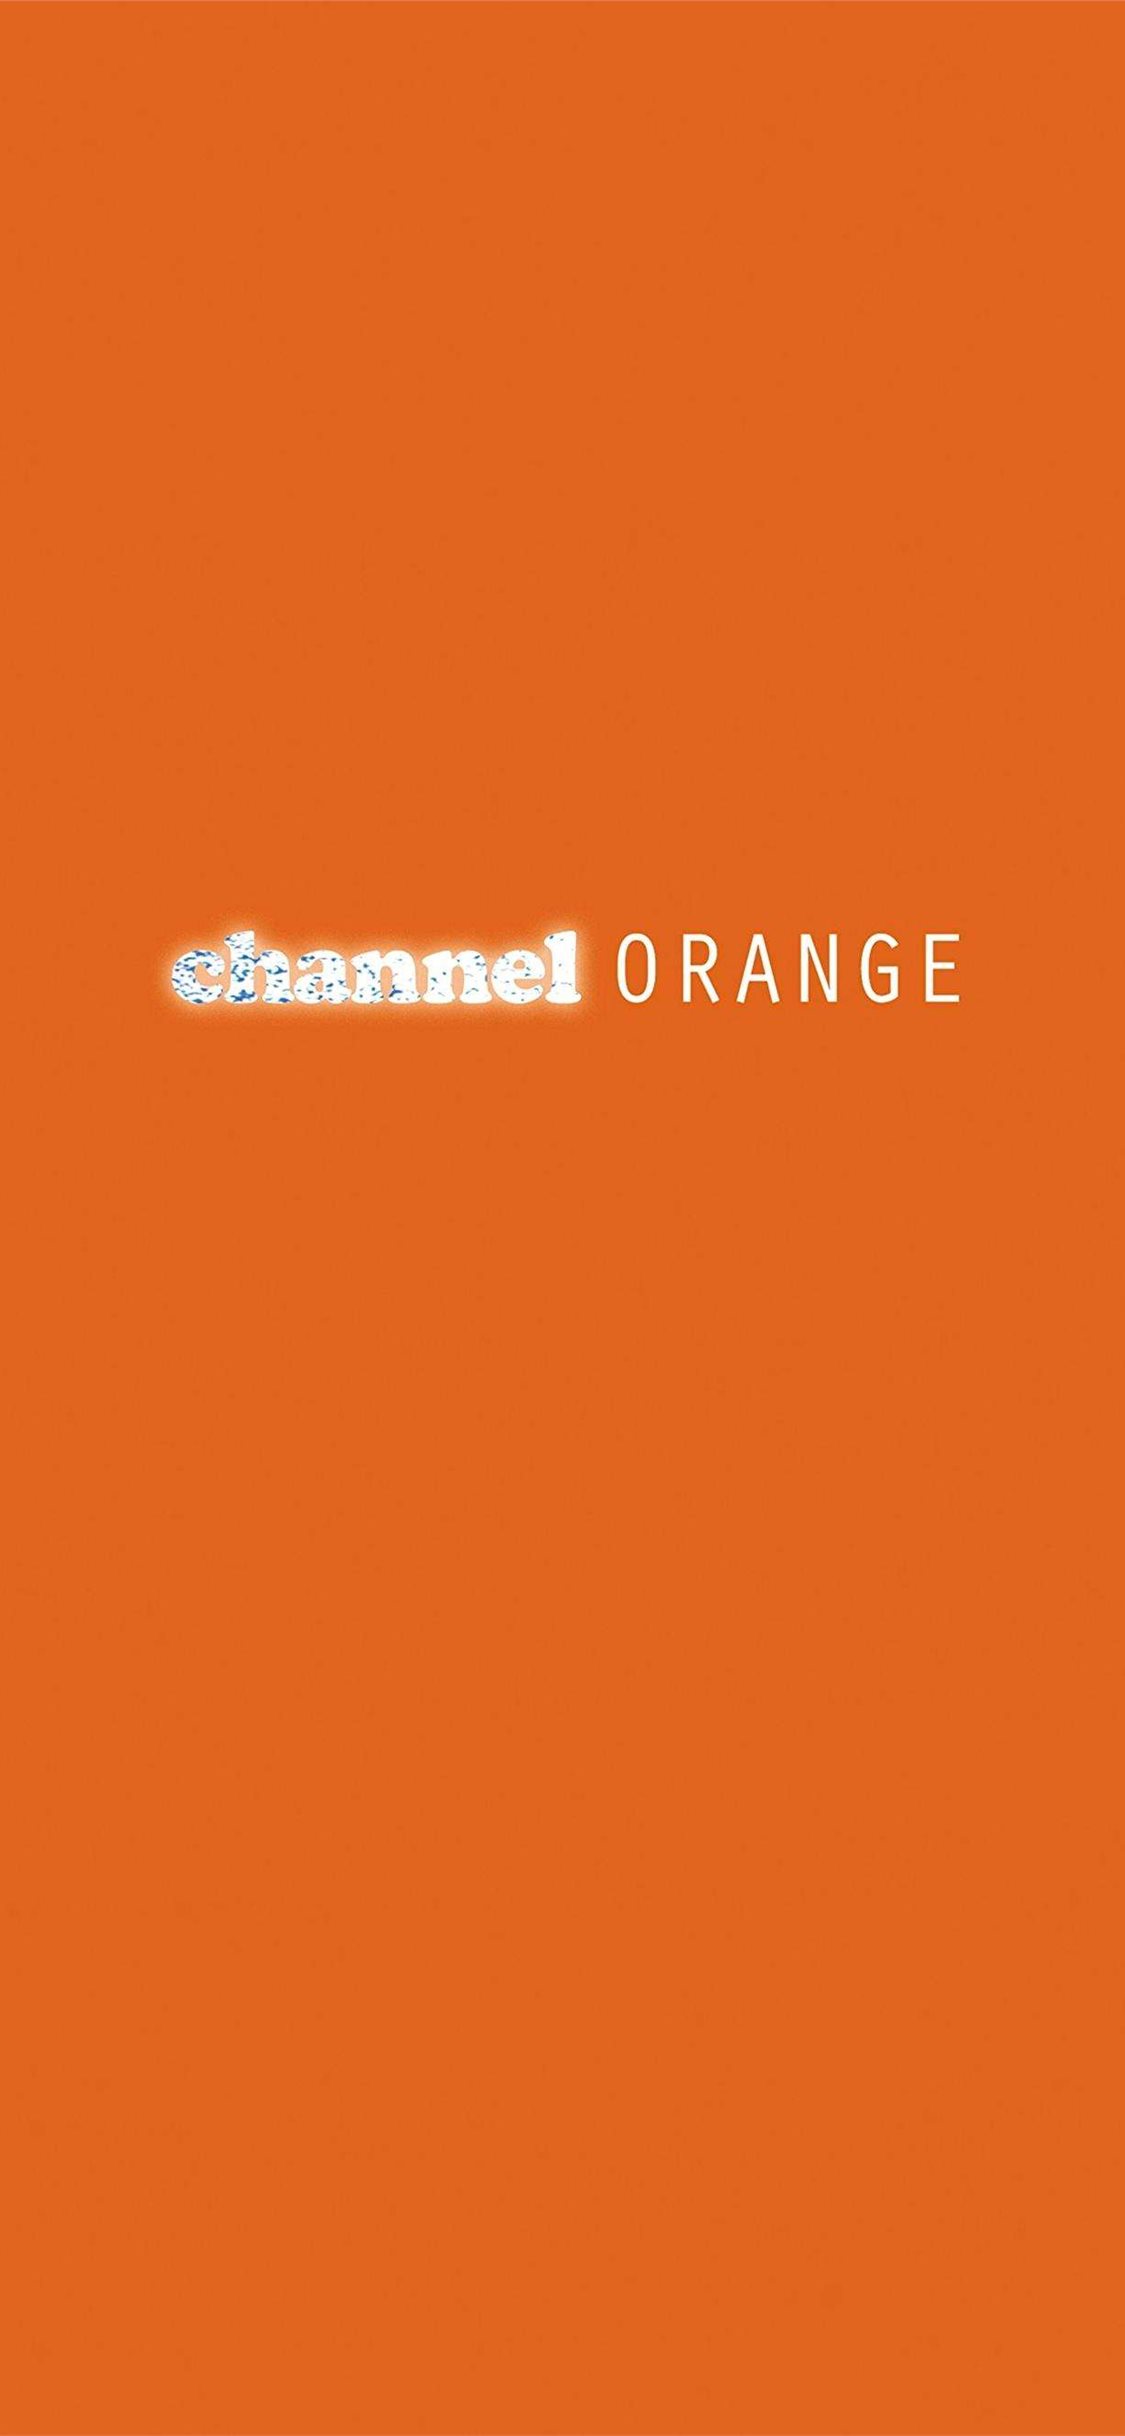 Channel Orange Фрэнк оушен